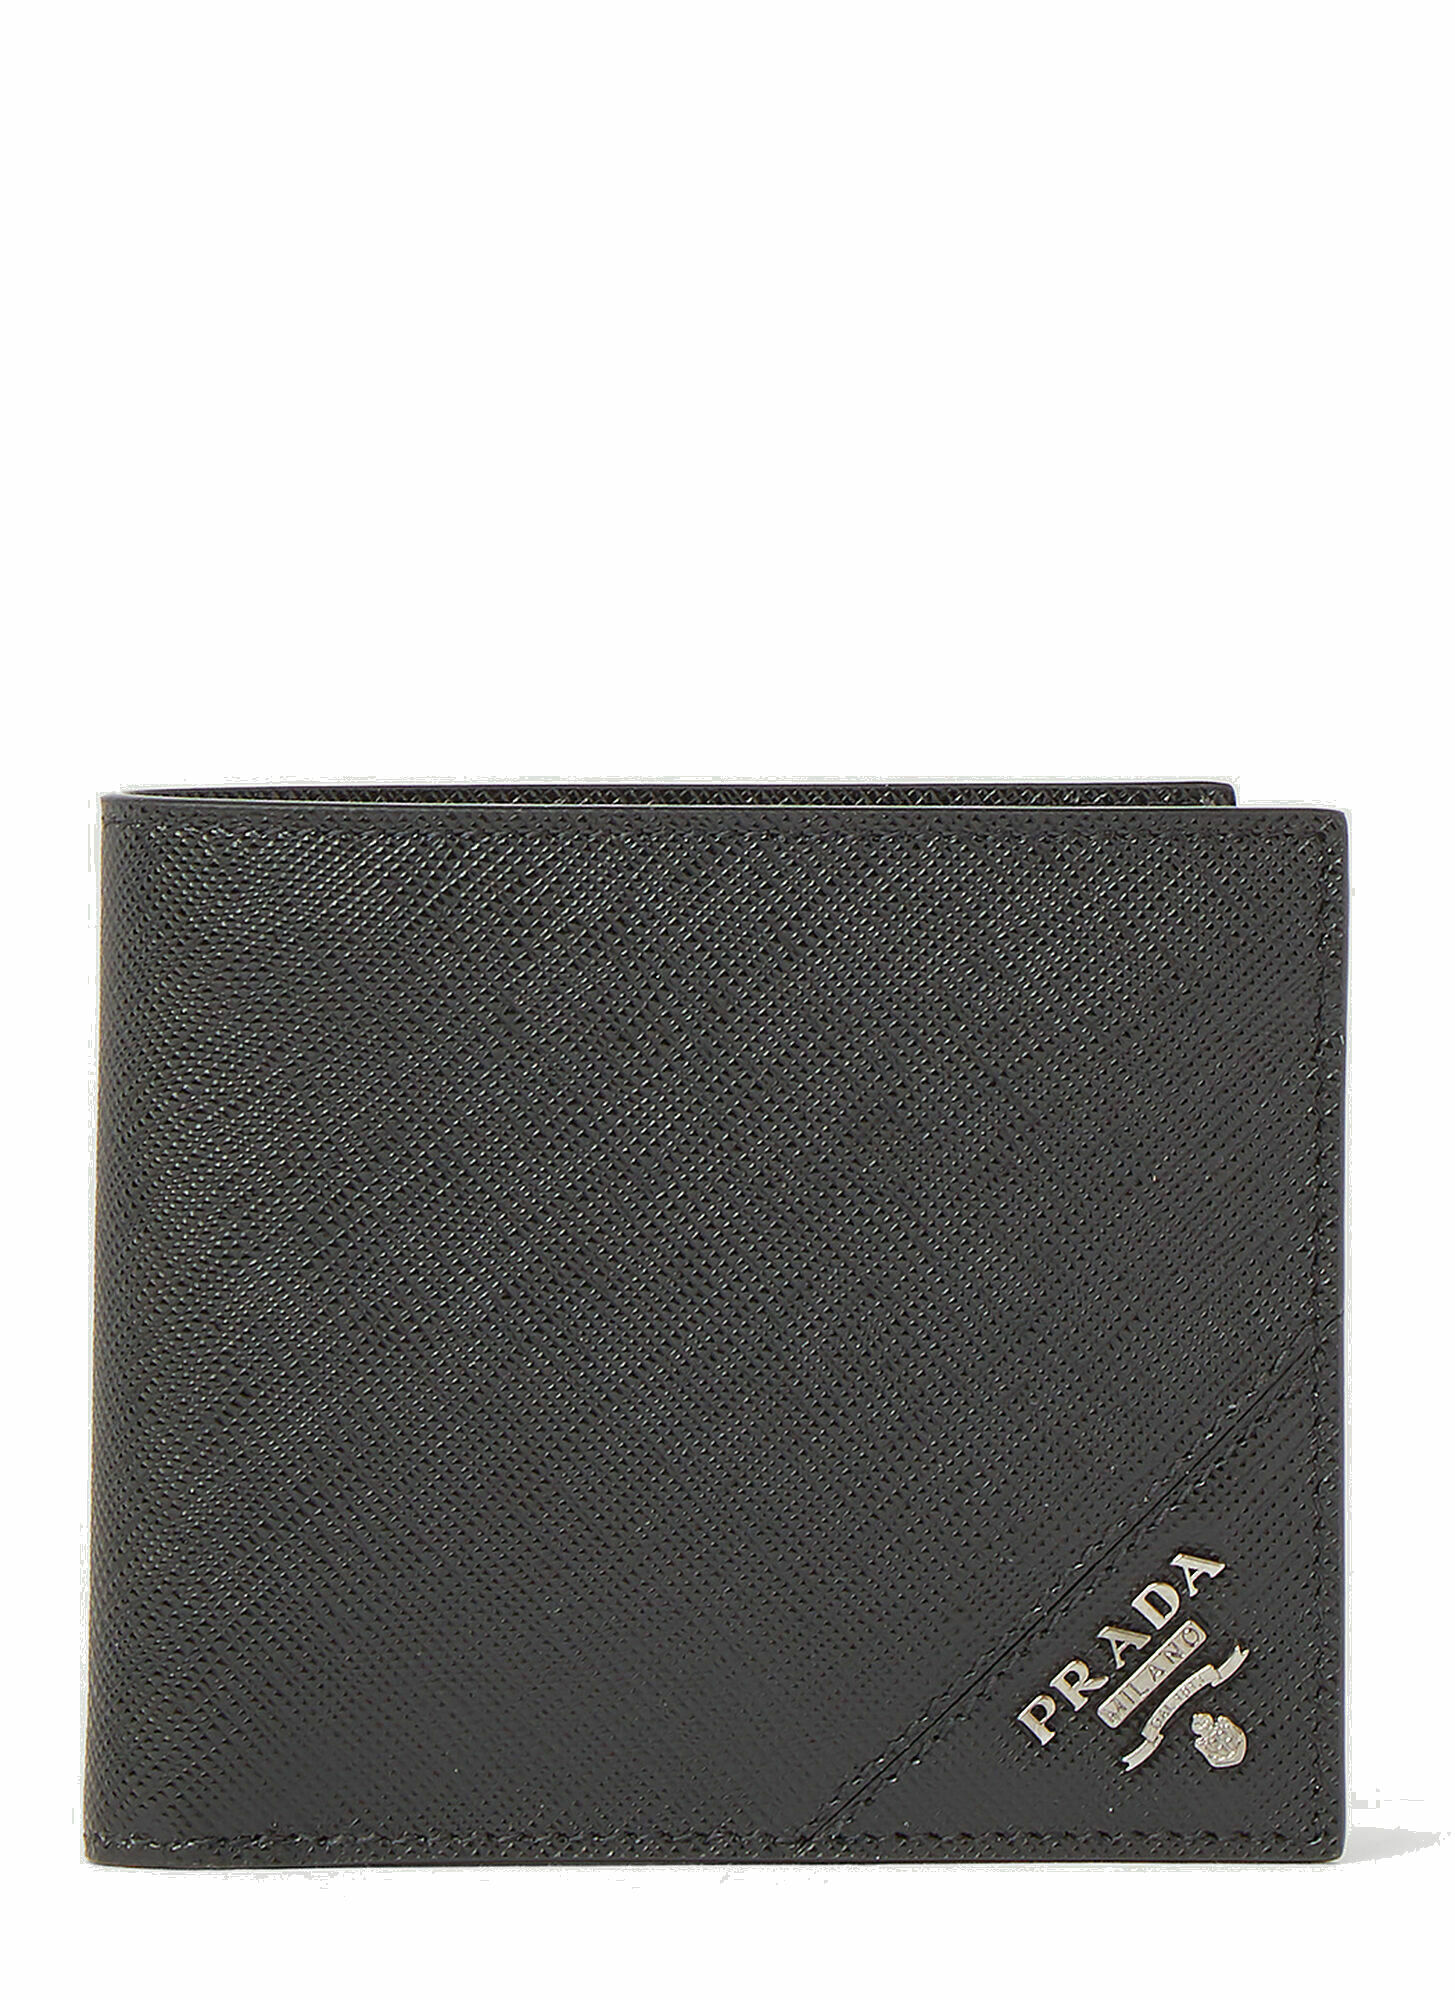 Photo: Prada - Saffiano Leather Bi-Fold Wallet in Black